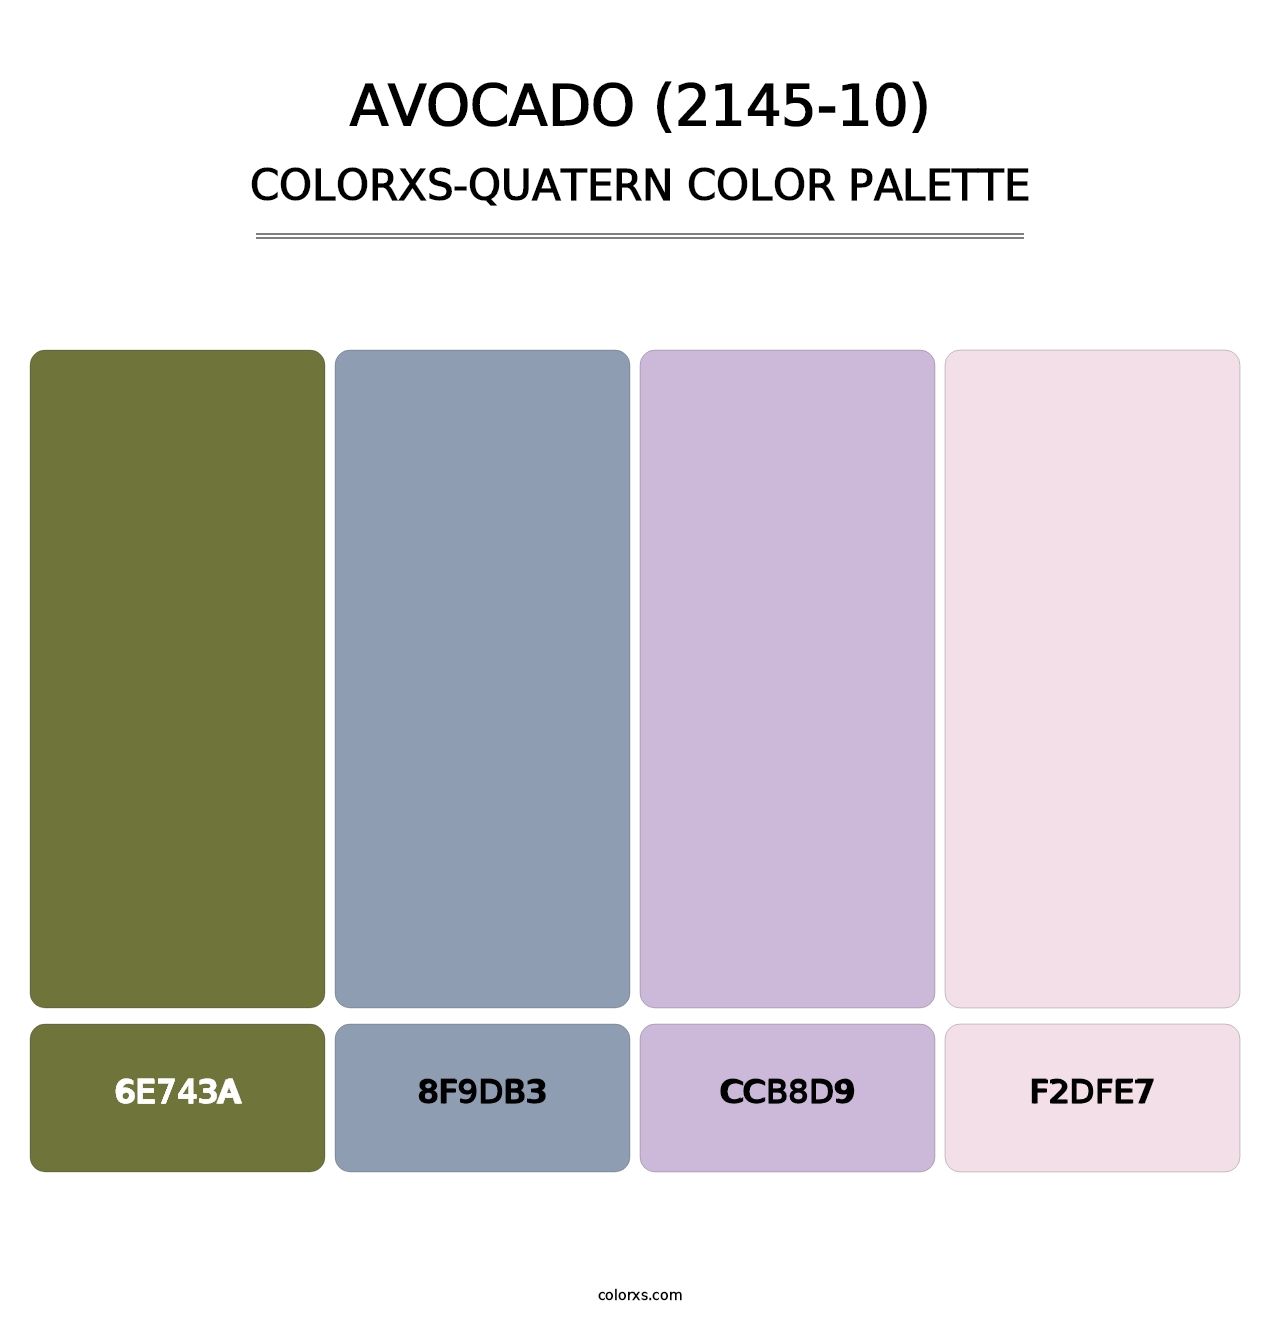 Avocado (2145-10) - Colorxs Quatern Palette